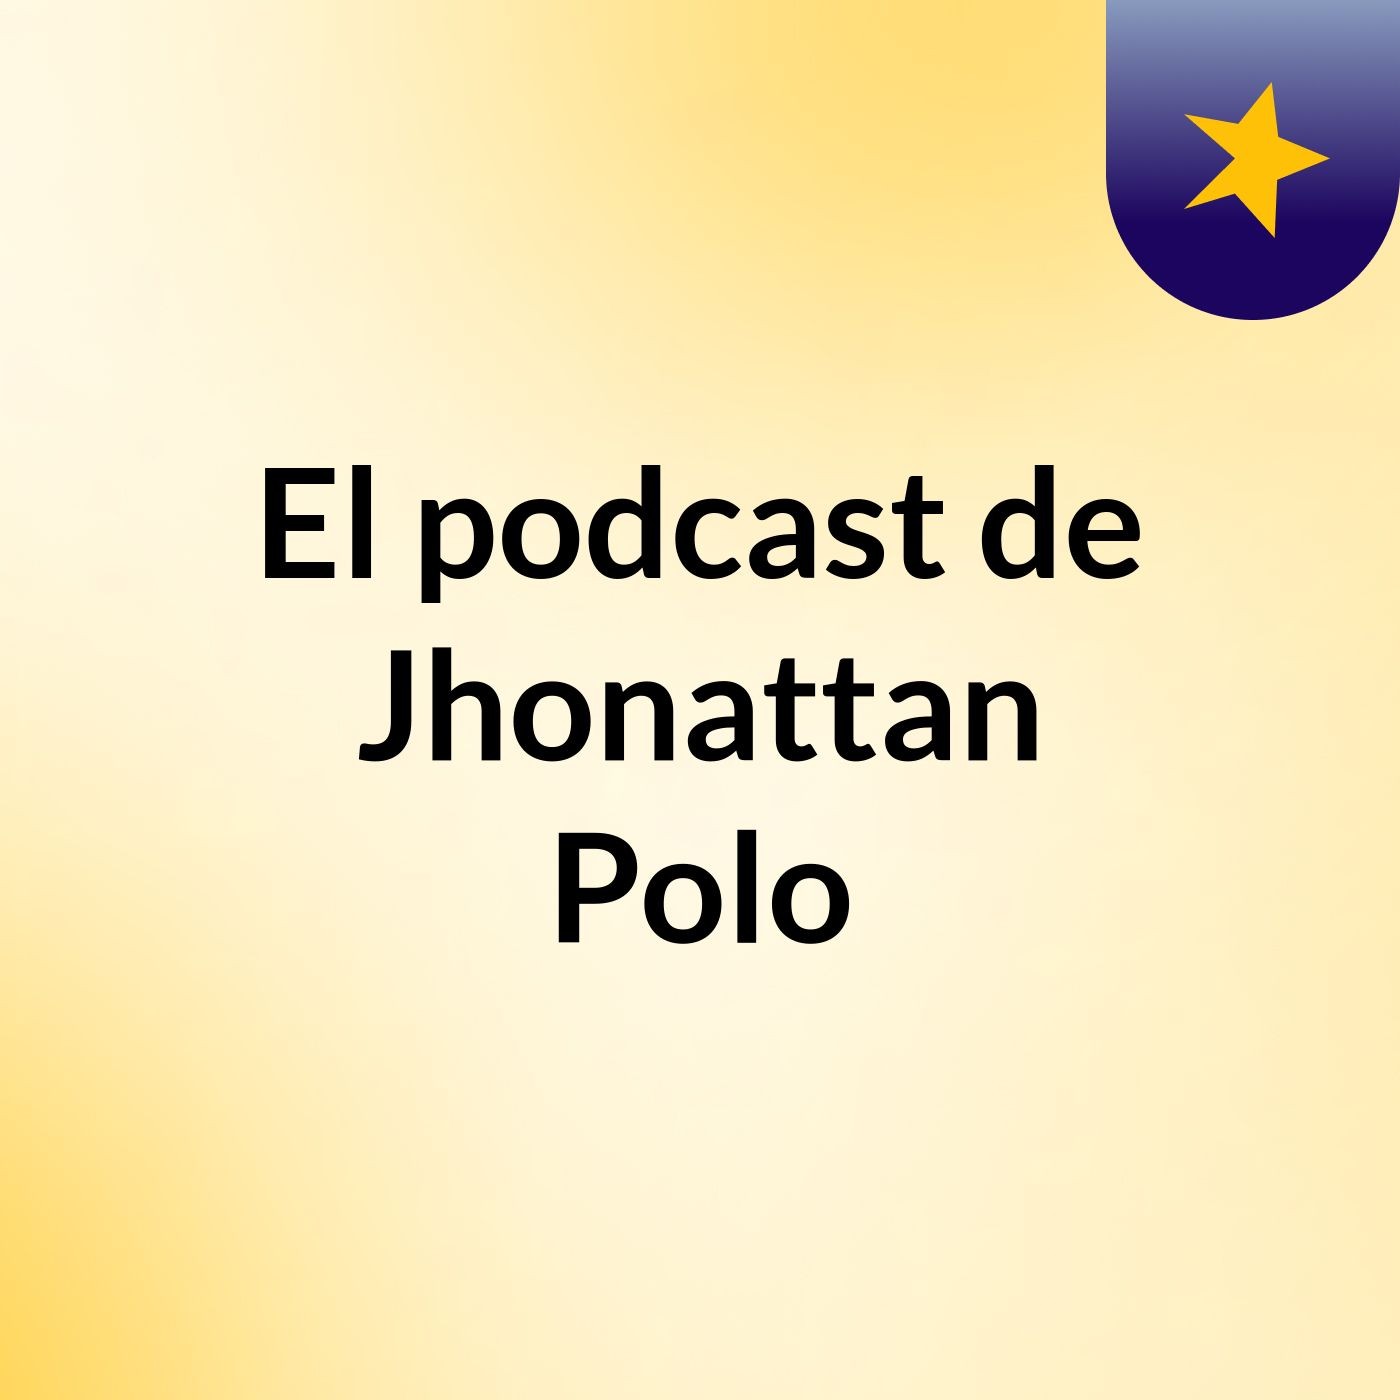 El podcast de Jhonattan Polo